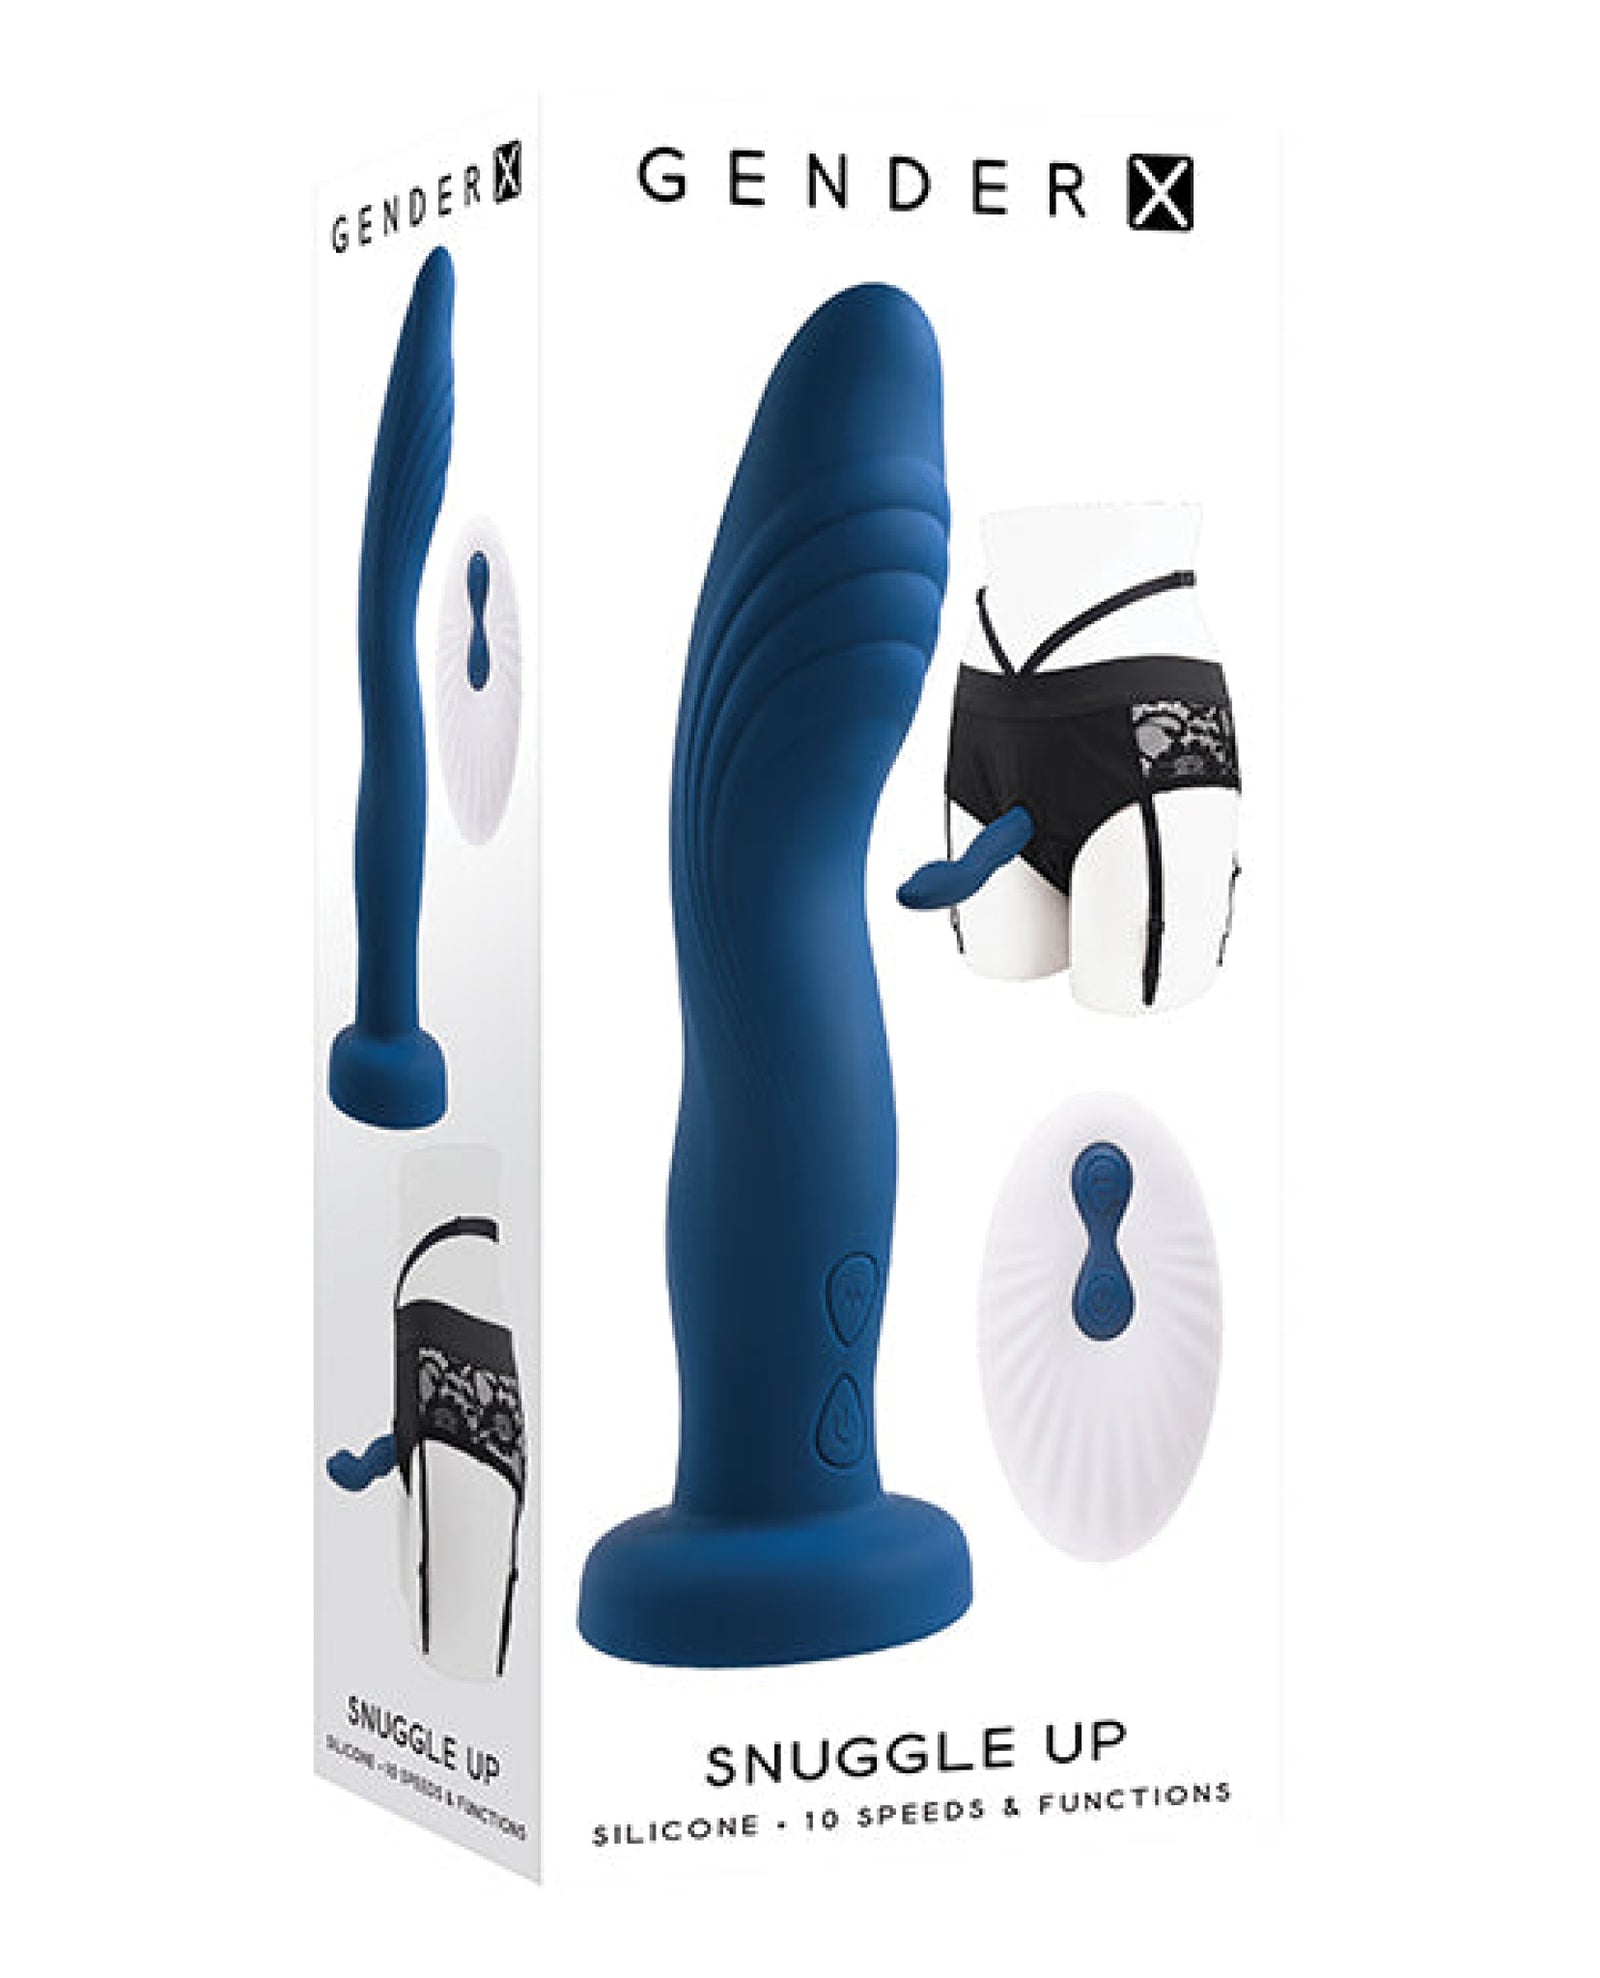 Gender X Snuggle Up Dual Motor Strap On Vibe W-harness - Blue Gender X